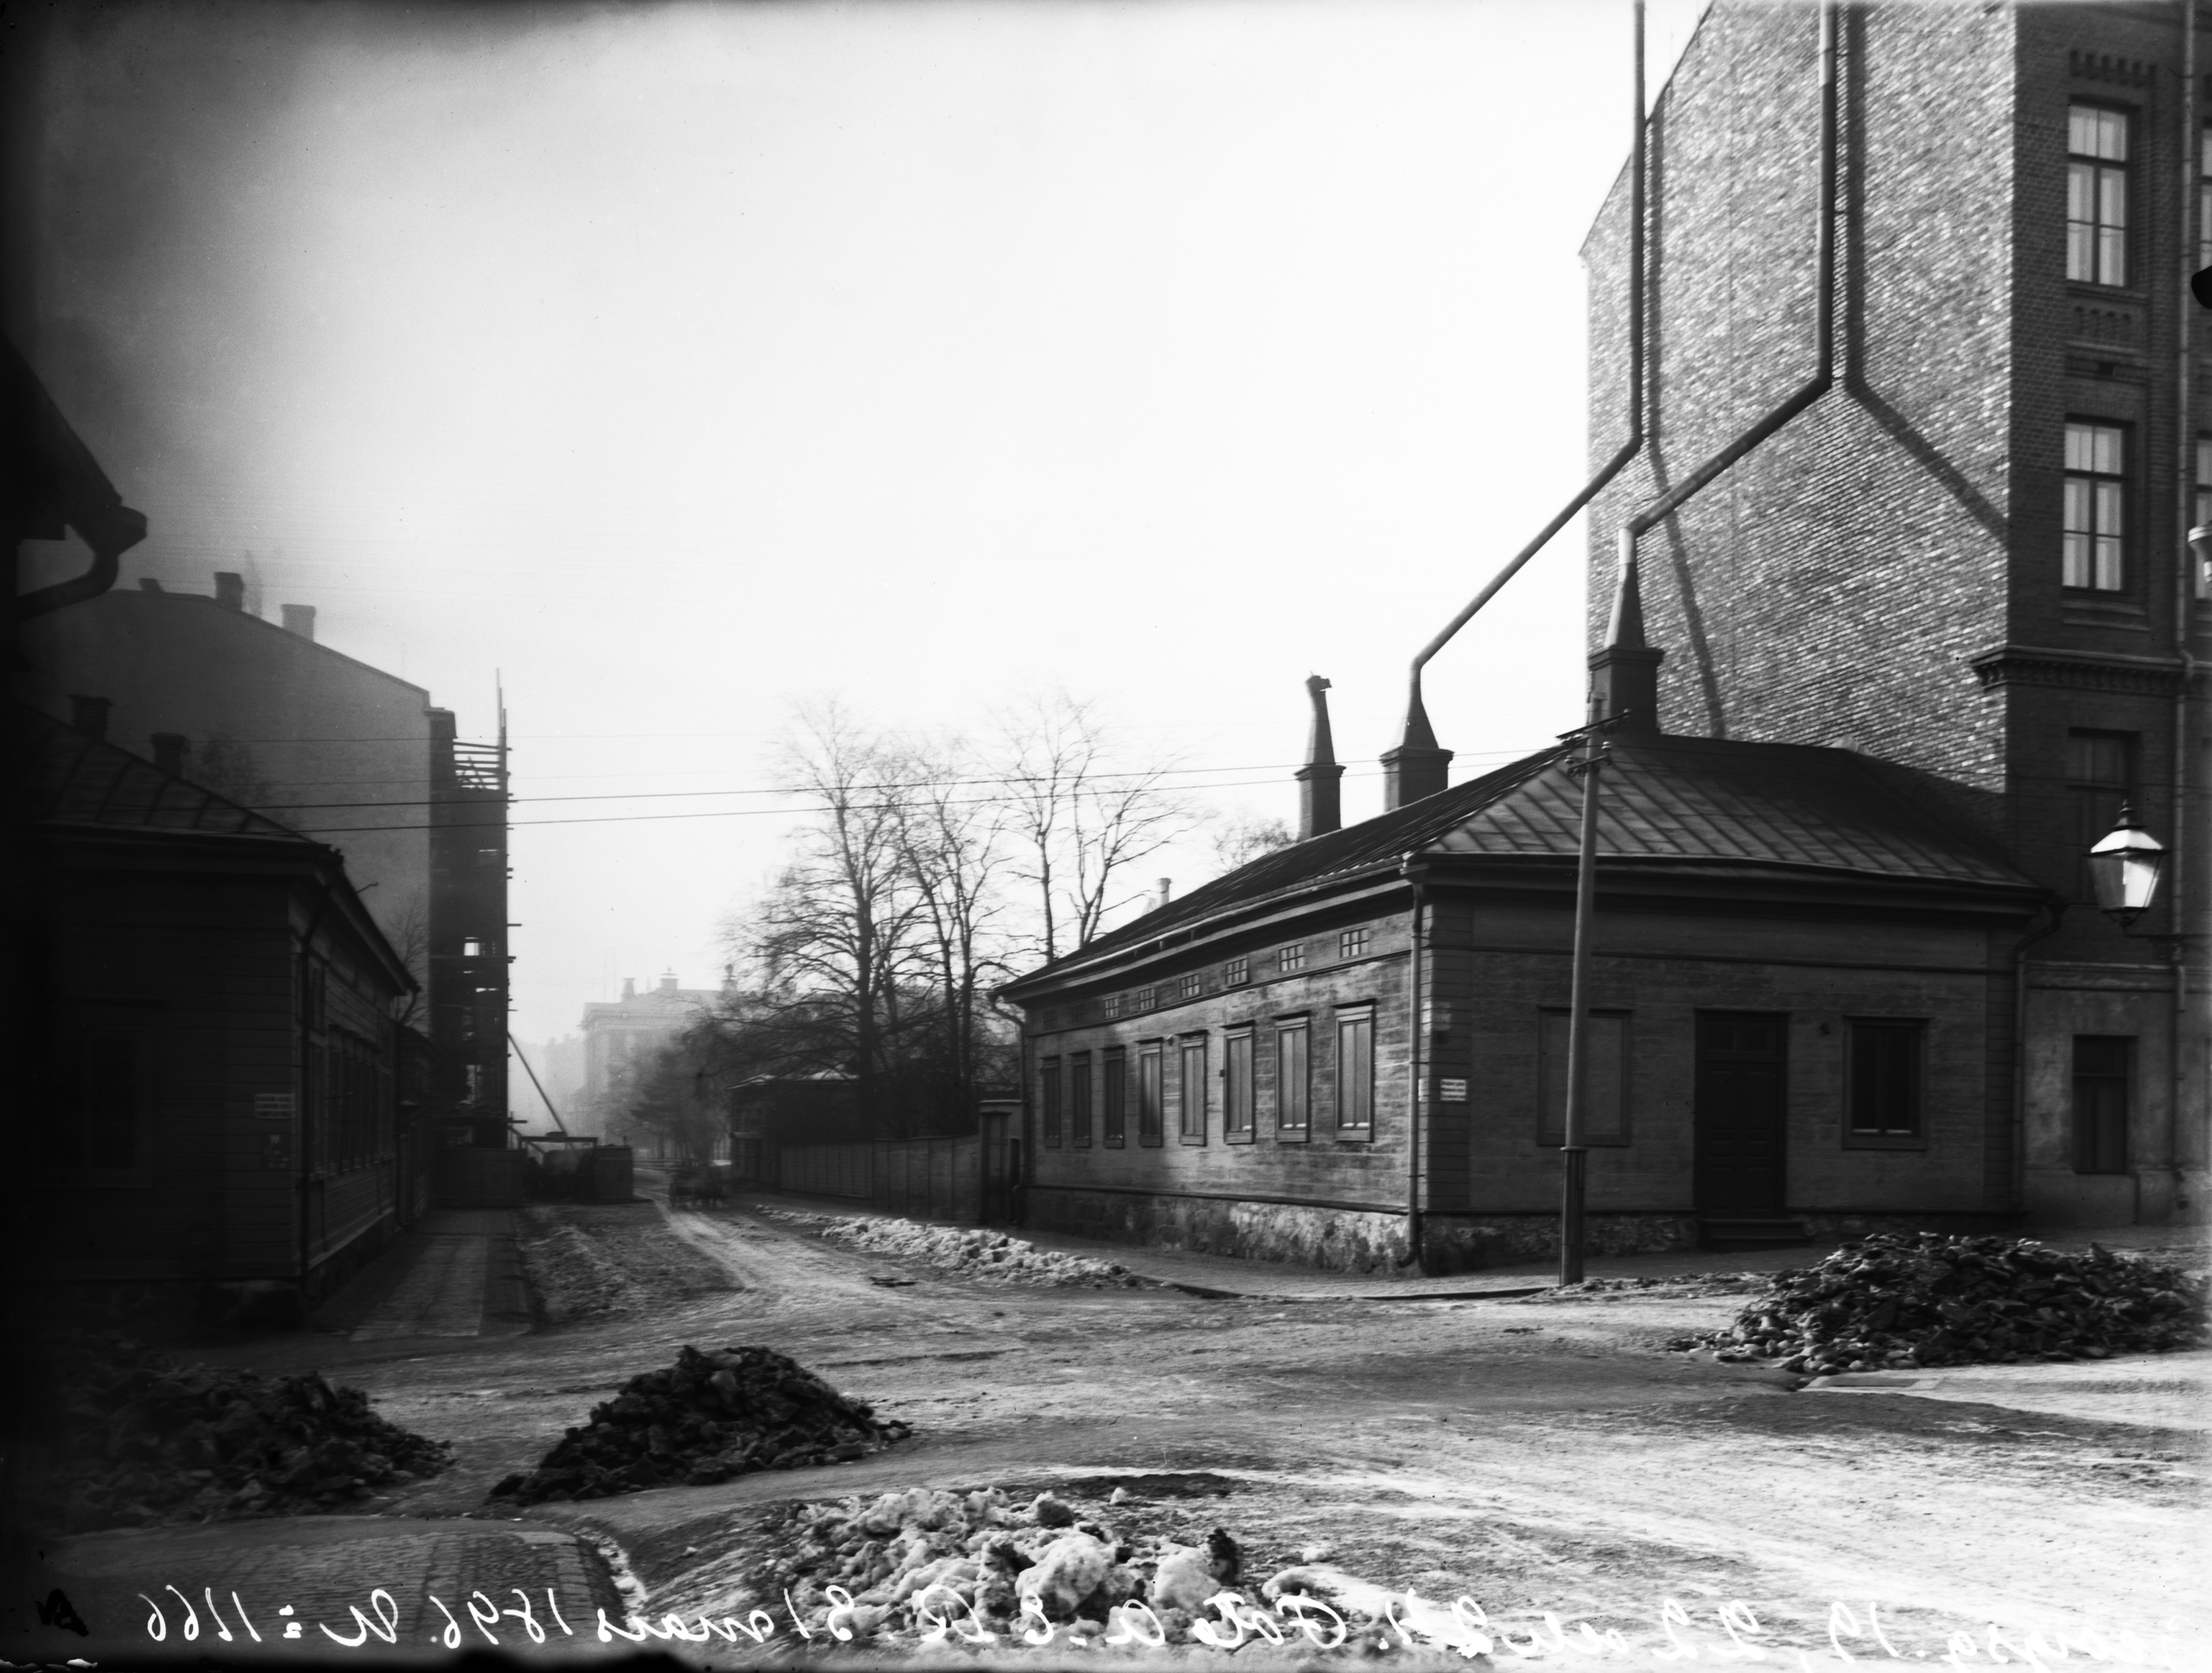 Yrjönkatu 24, 22, 19. Vladimirinkatu 6 (=Kalevankatu 6). Yrjönkatu 24:ssä asui J. V. Snellman perheineen vuosina 1855-1881.